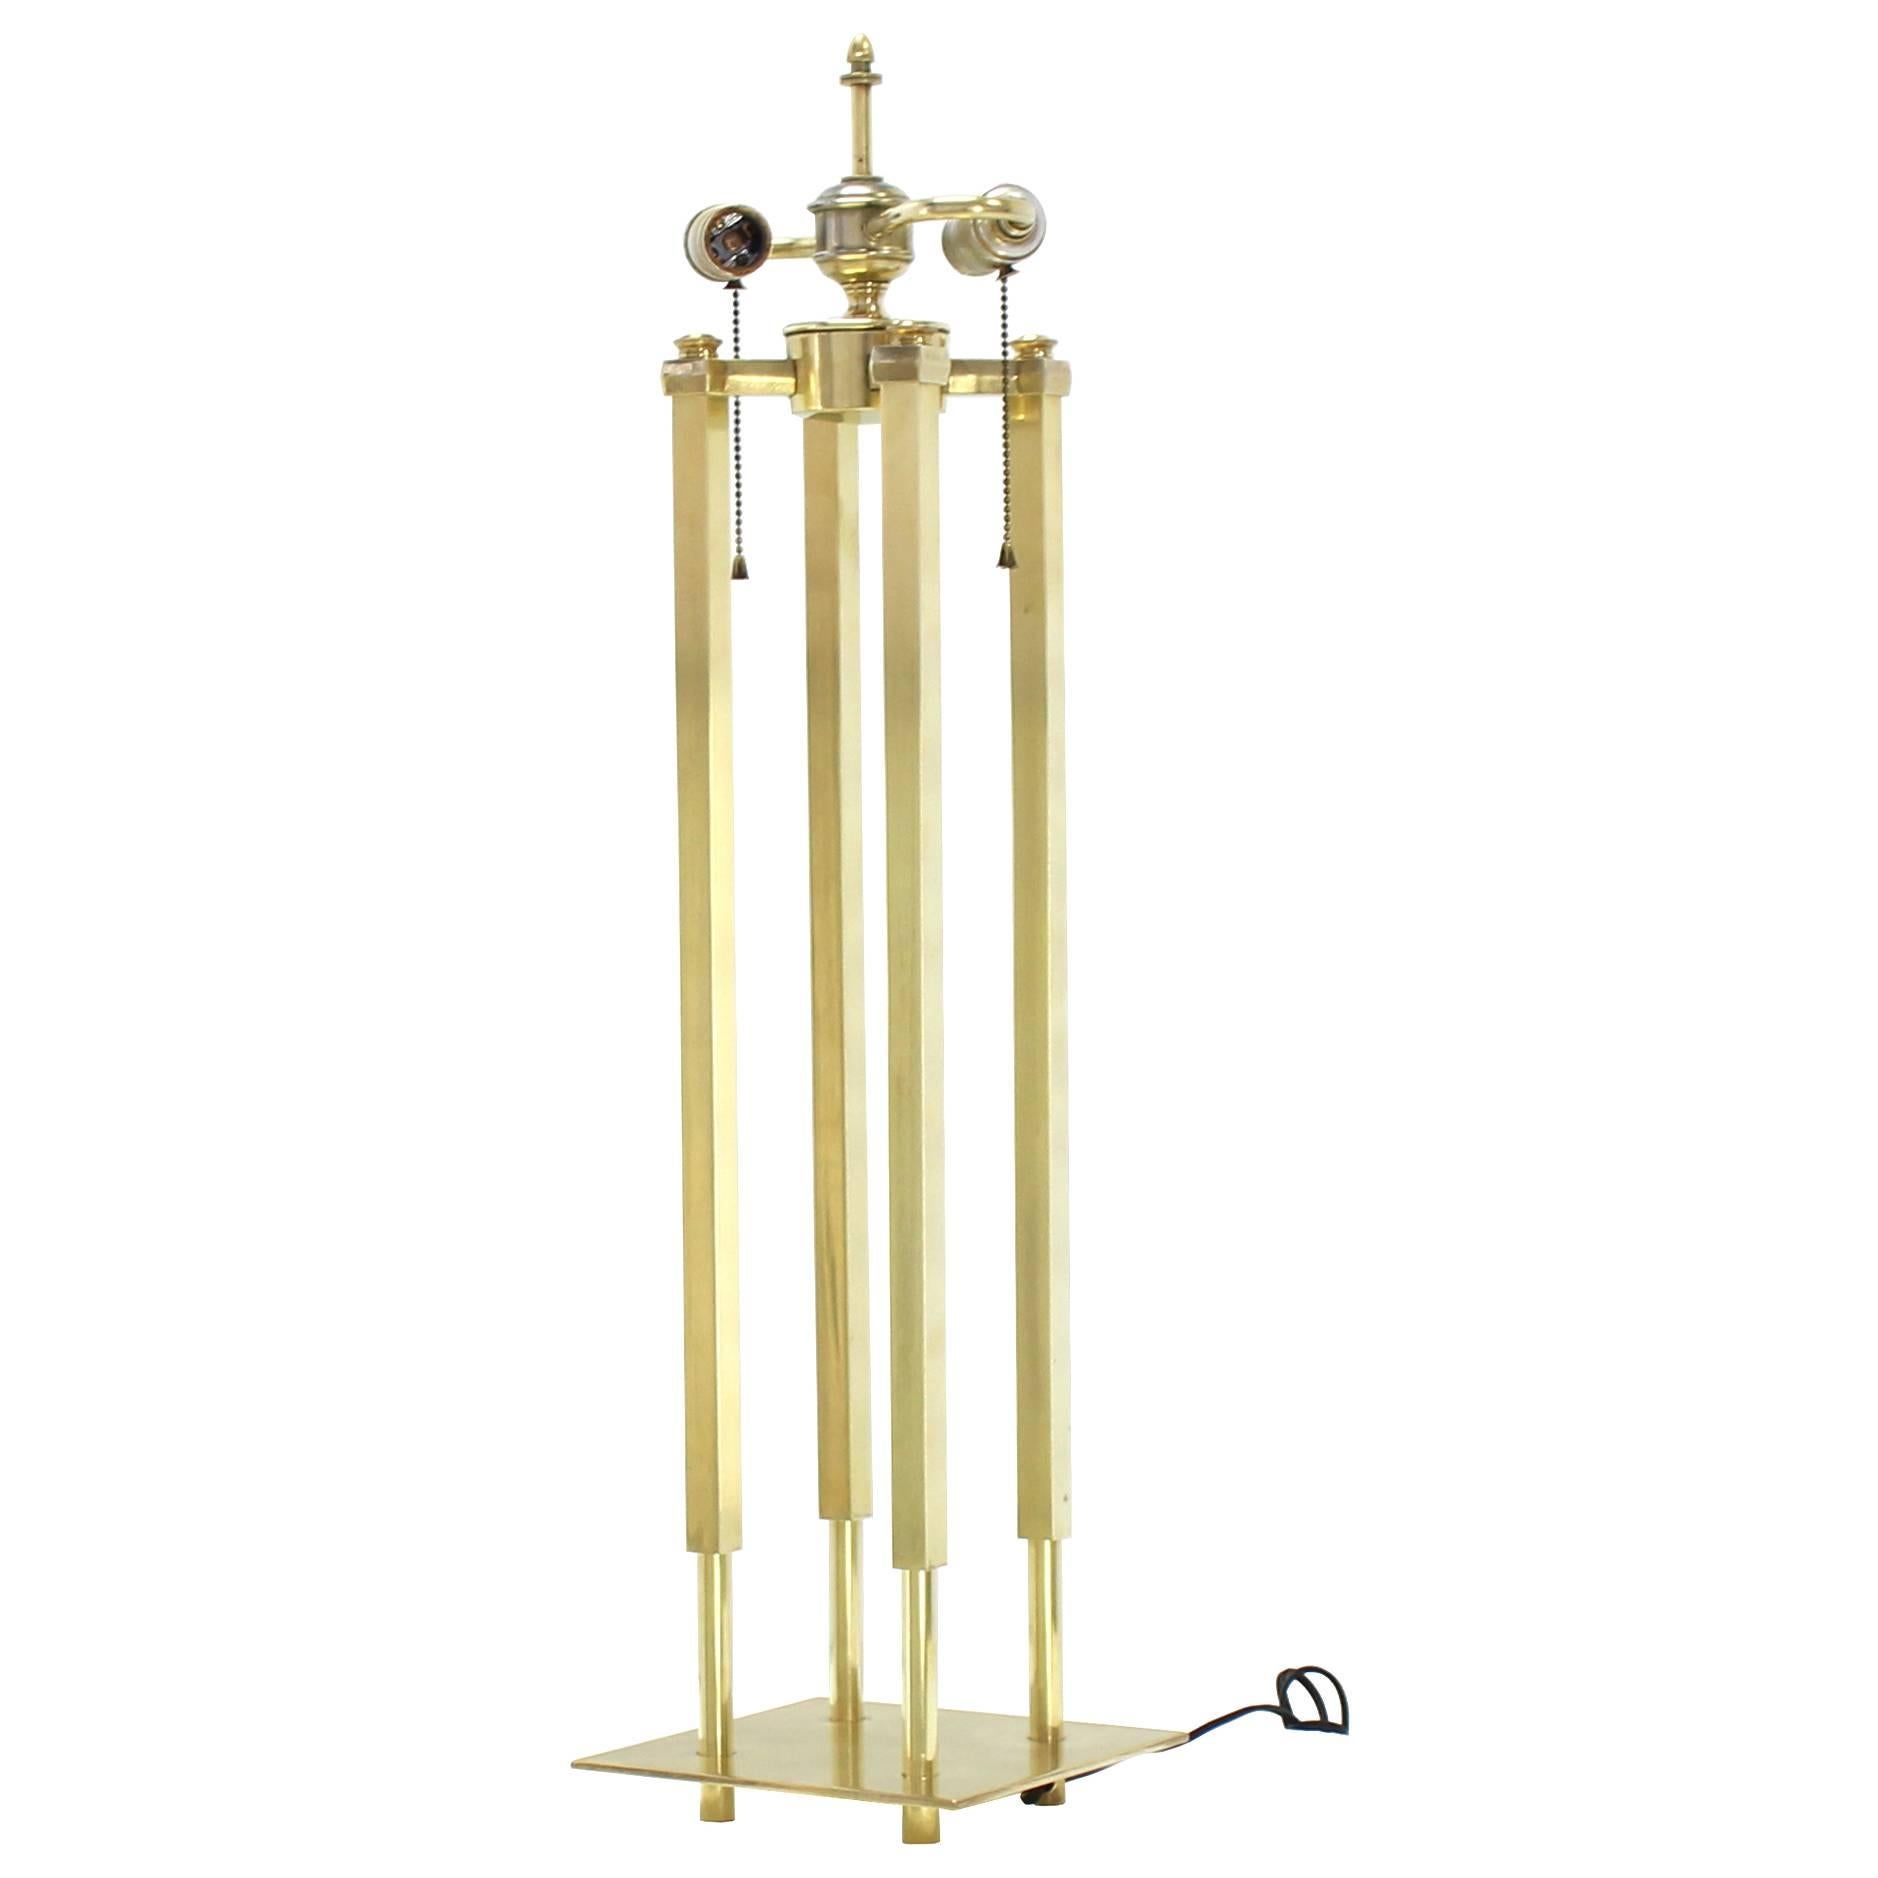 Stifle Brass Table Lamp